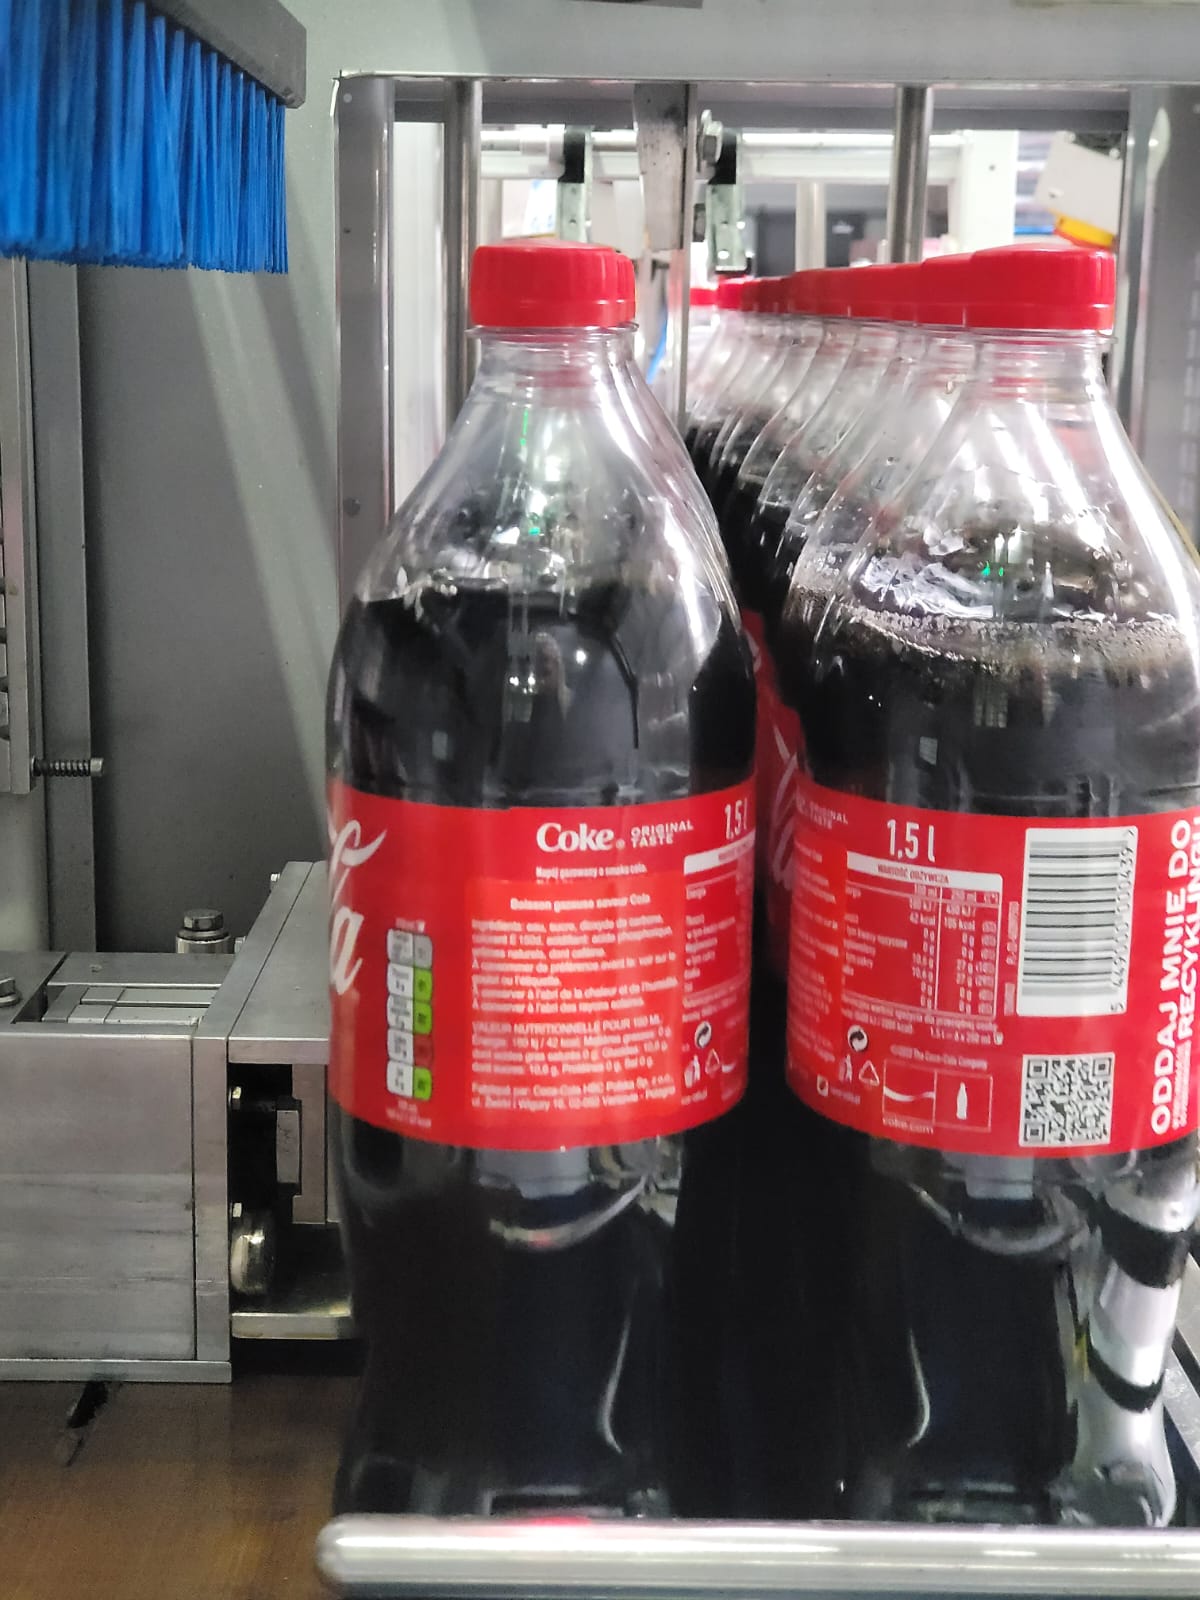 1.5L bottles Polish Coca Cola during machine pacing